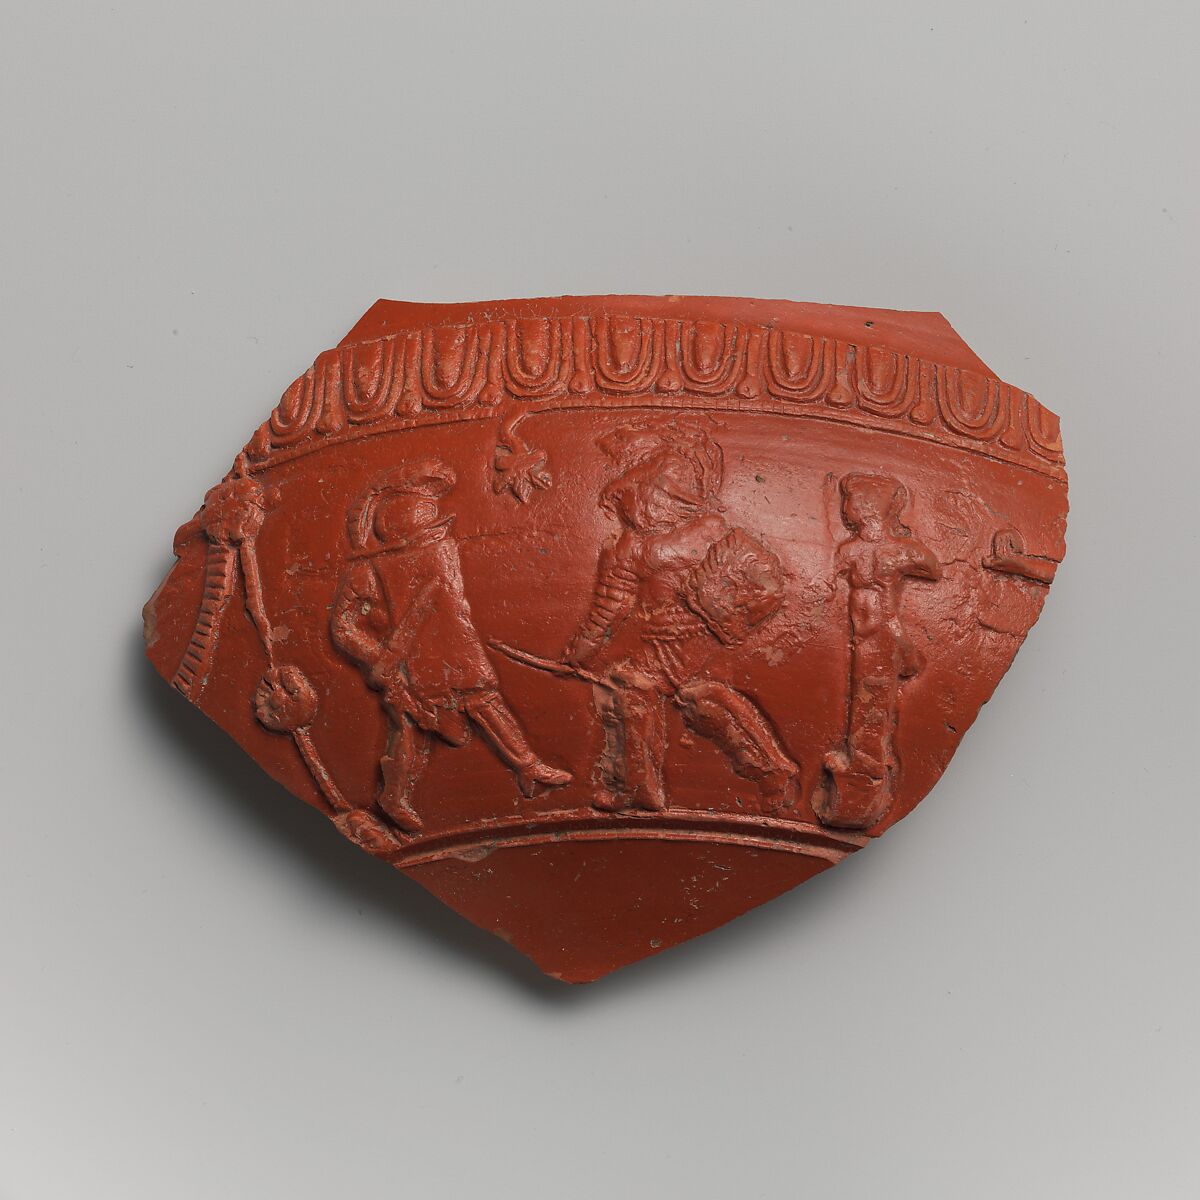 Terracotta fragment of a bowl